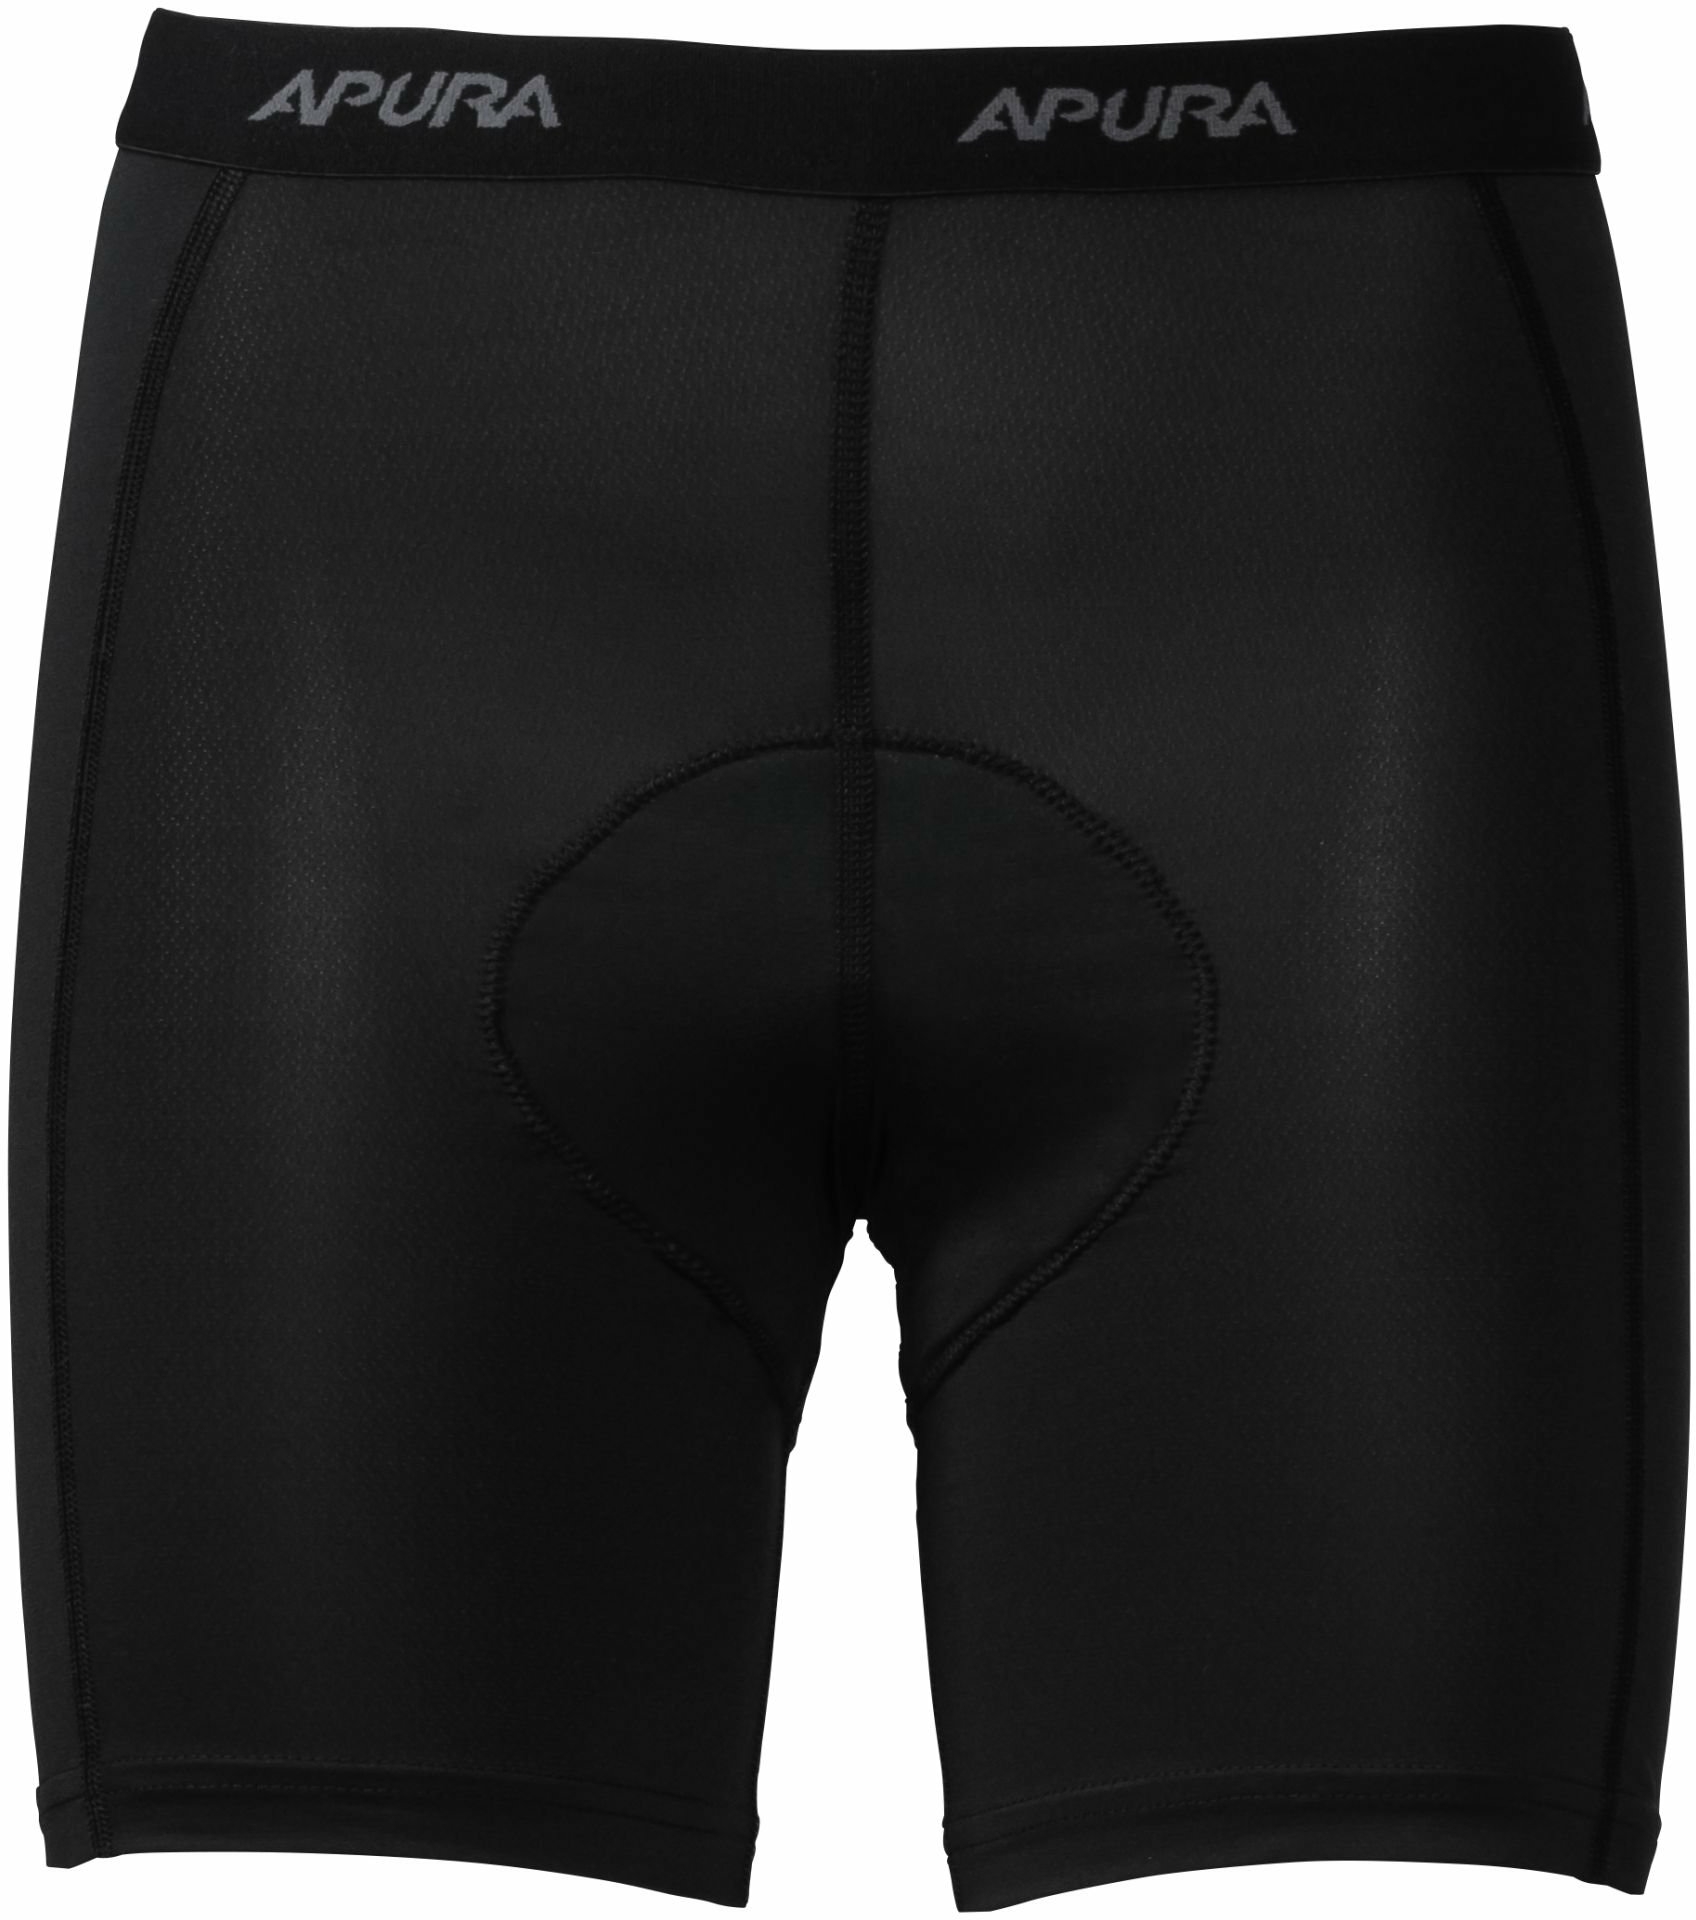 Bekleidung/Unterwäsche: Apura  Damen Unterhose Baselayer Short Pro Comfort XXL 